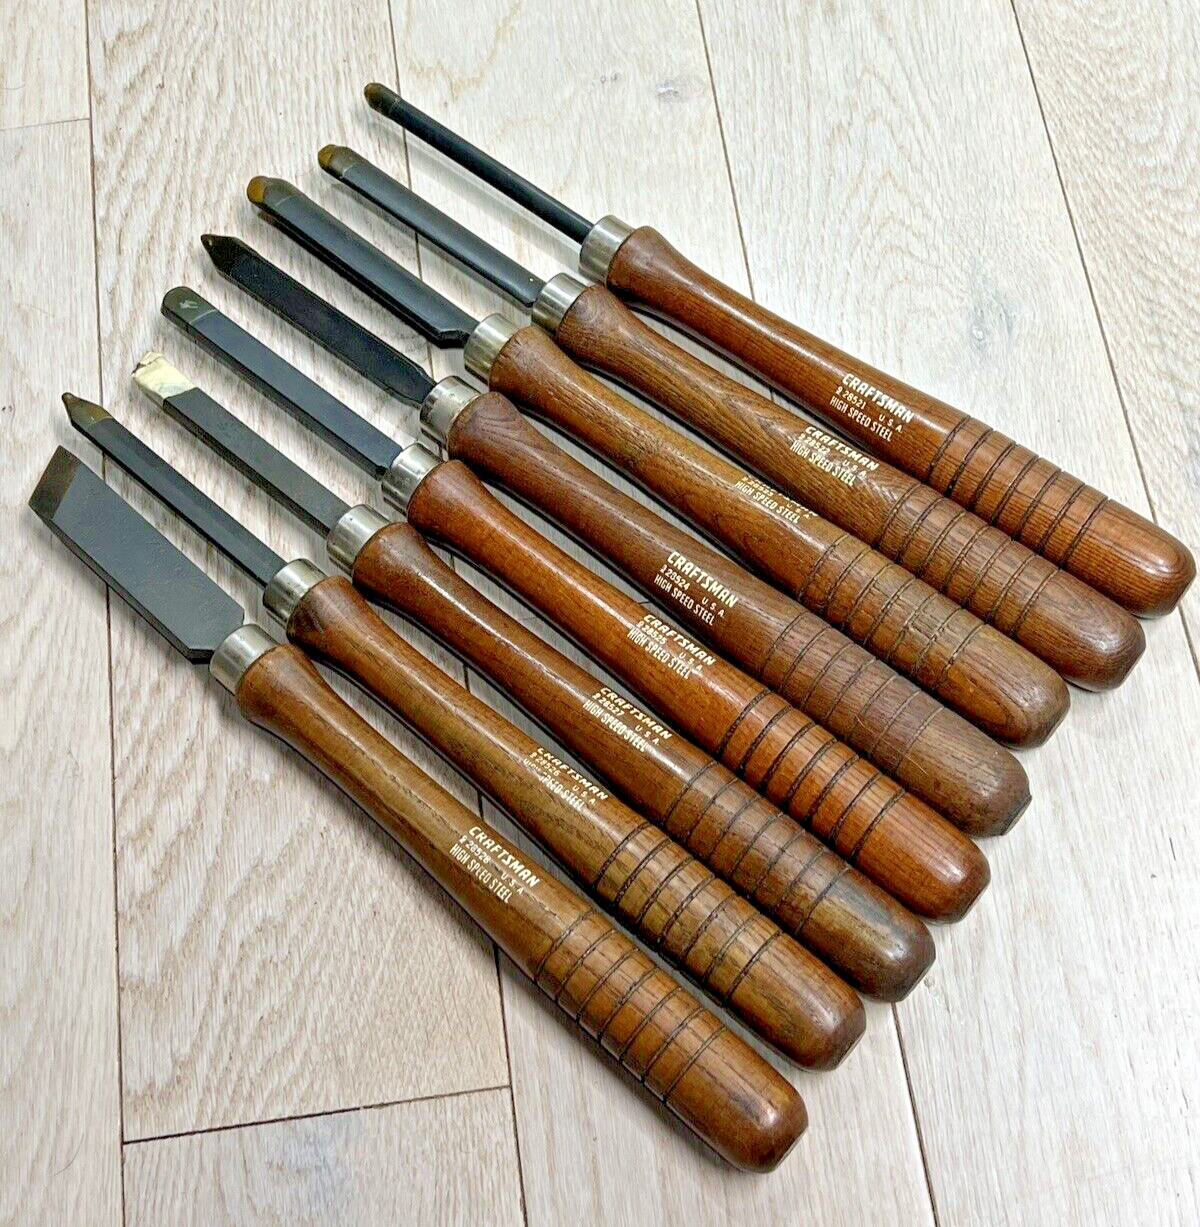 Set 8 Craftsman Wood Turning Lathe Knives Chisels Woodworking Tool 28521 - 28528